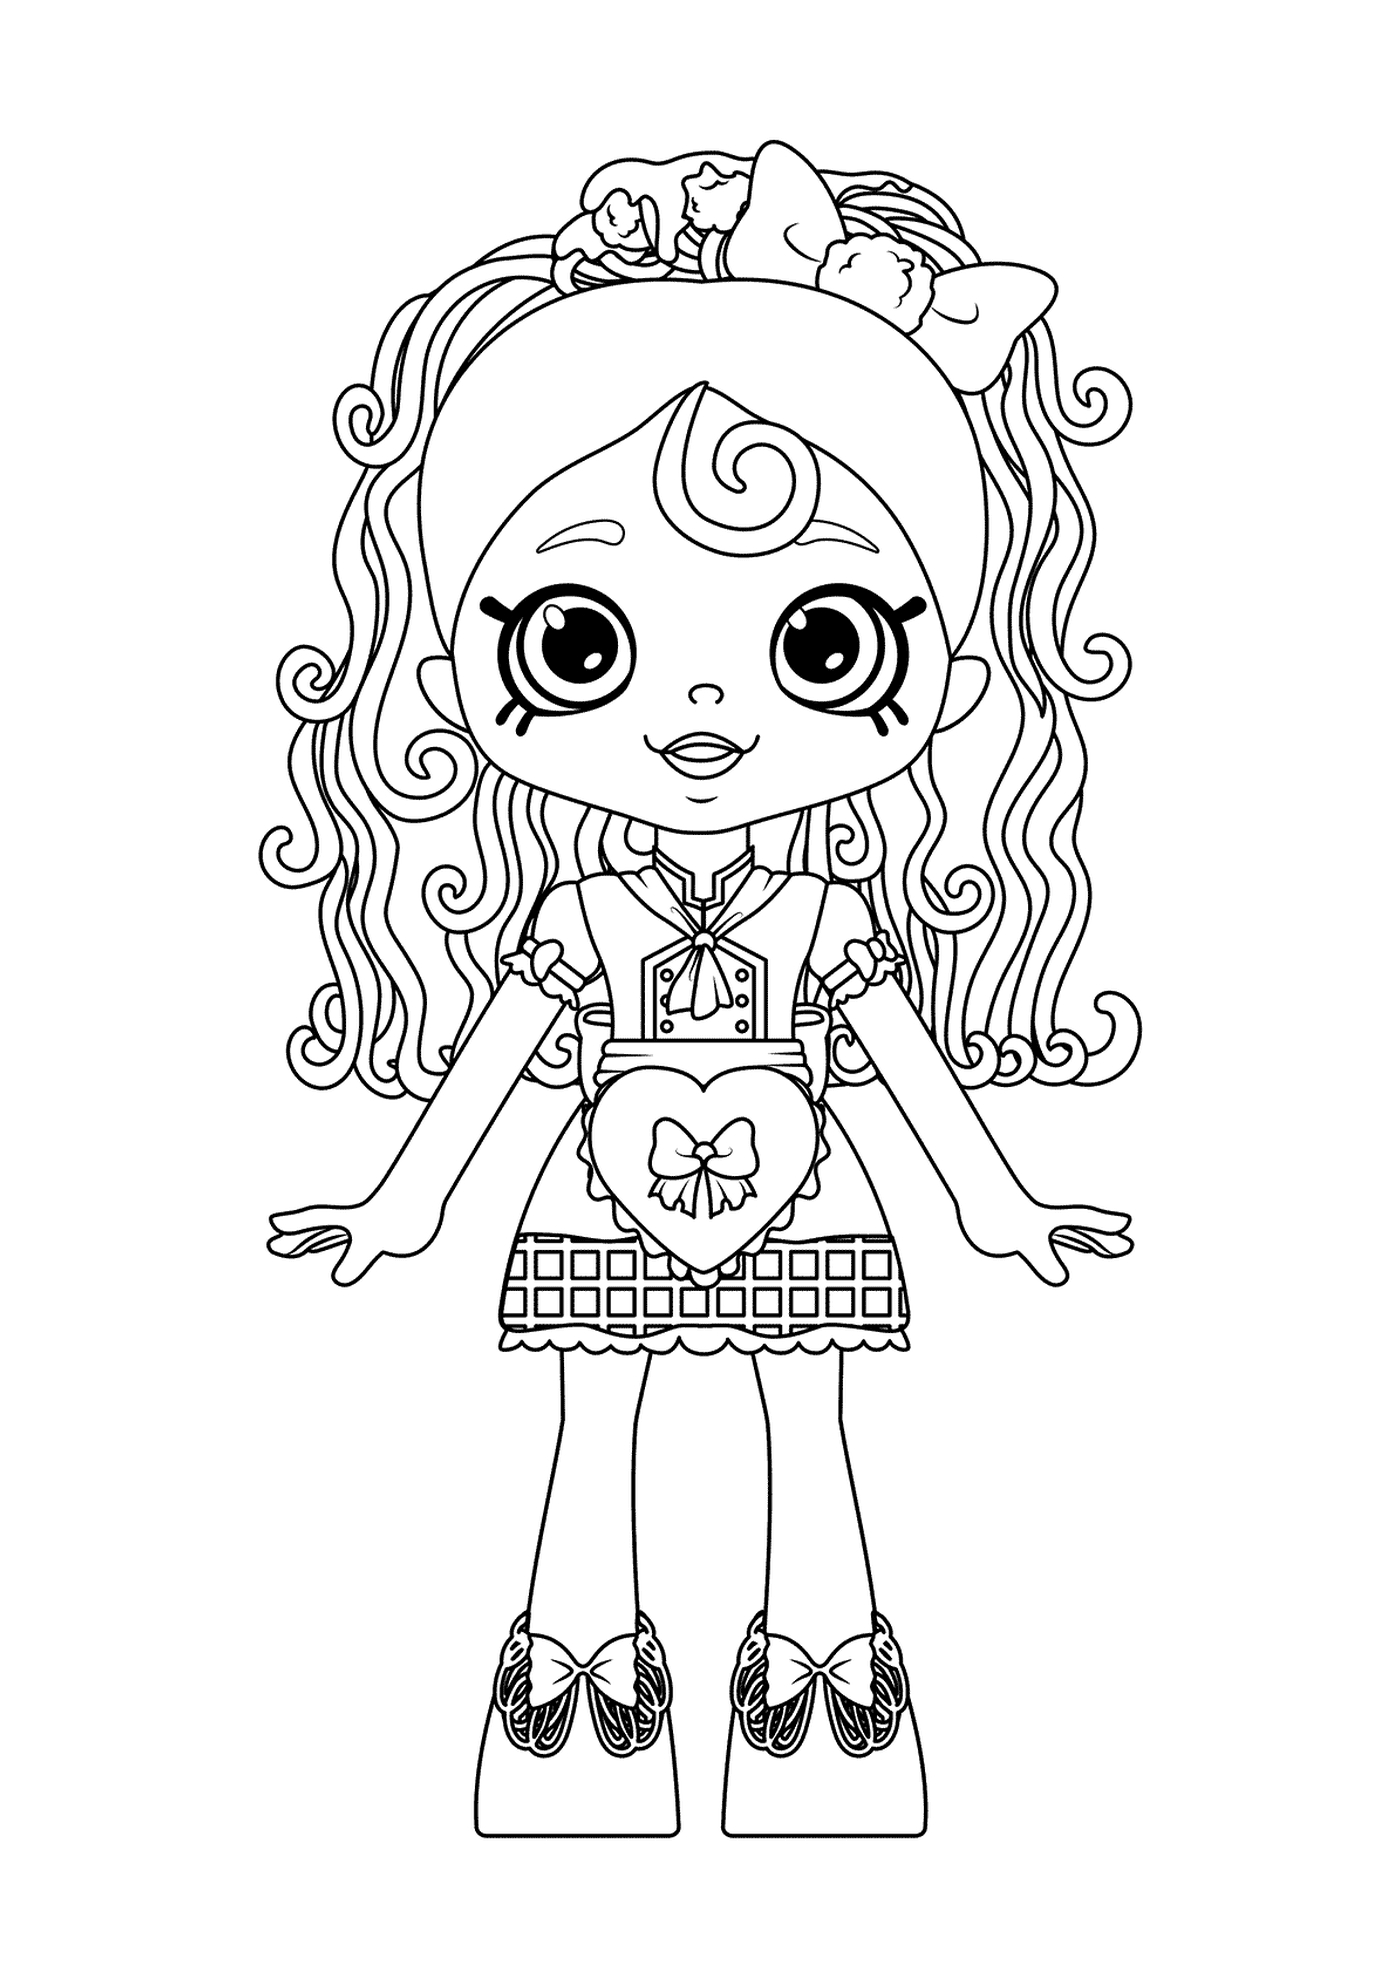  Una chica con una muñeca de espagueti 